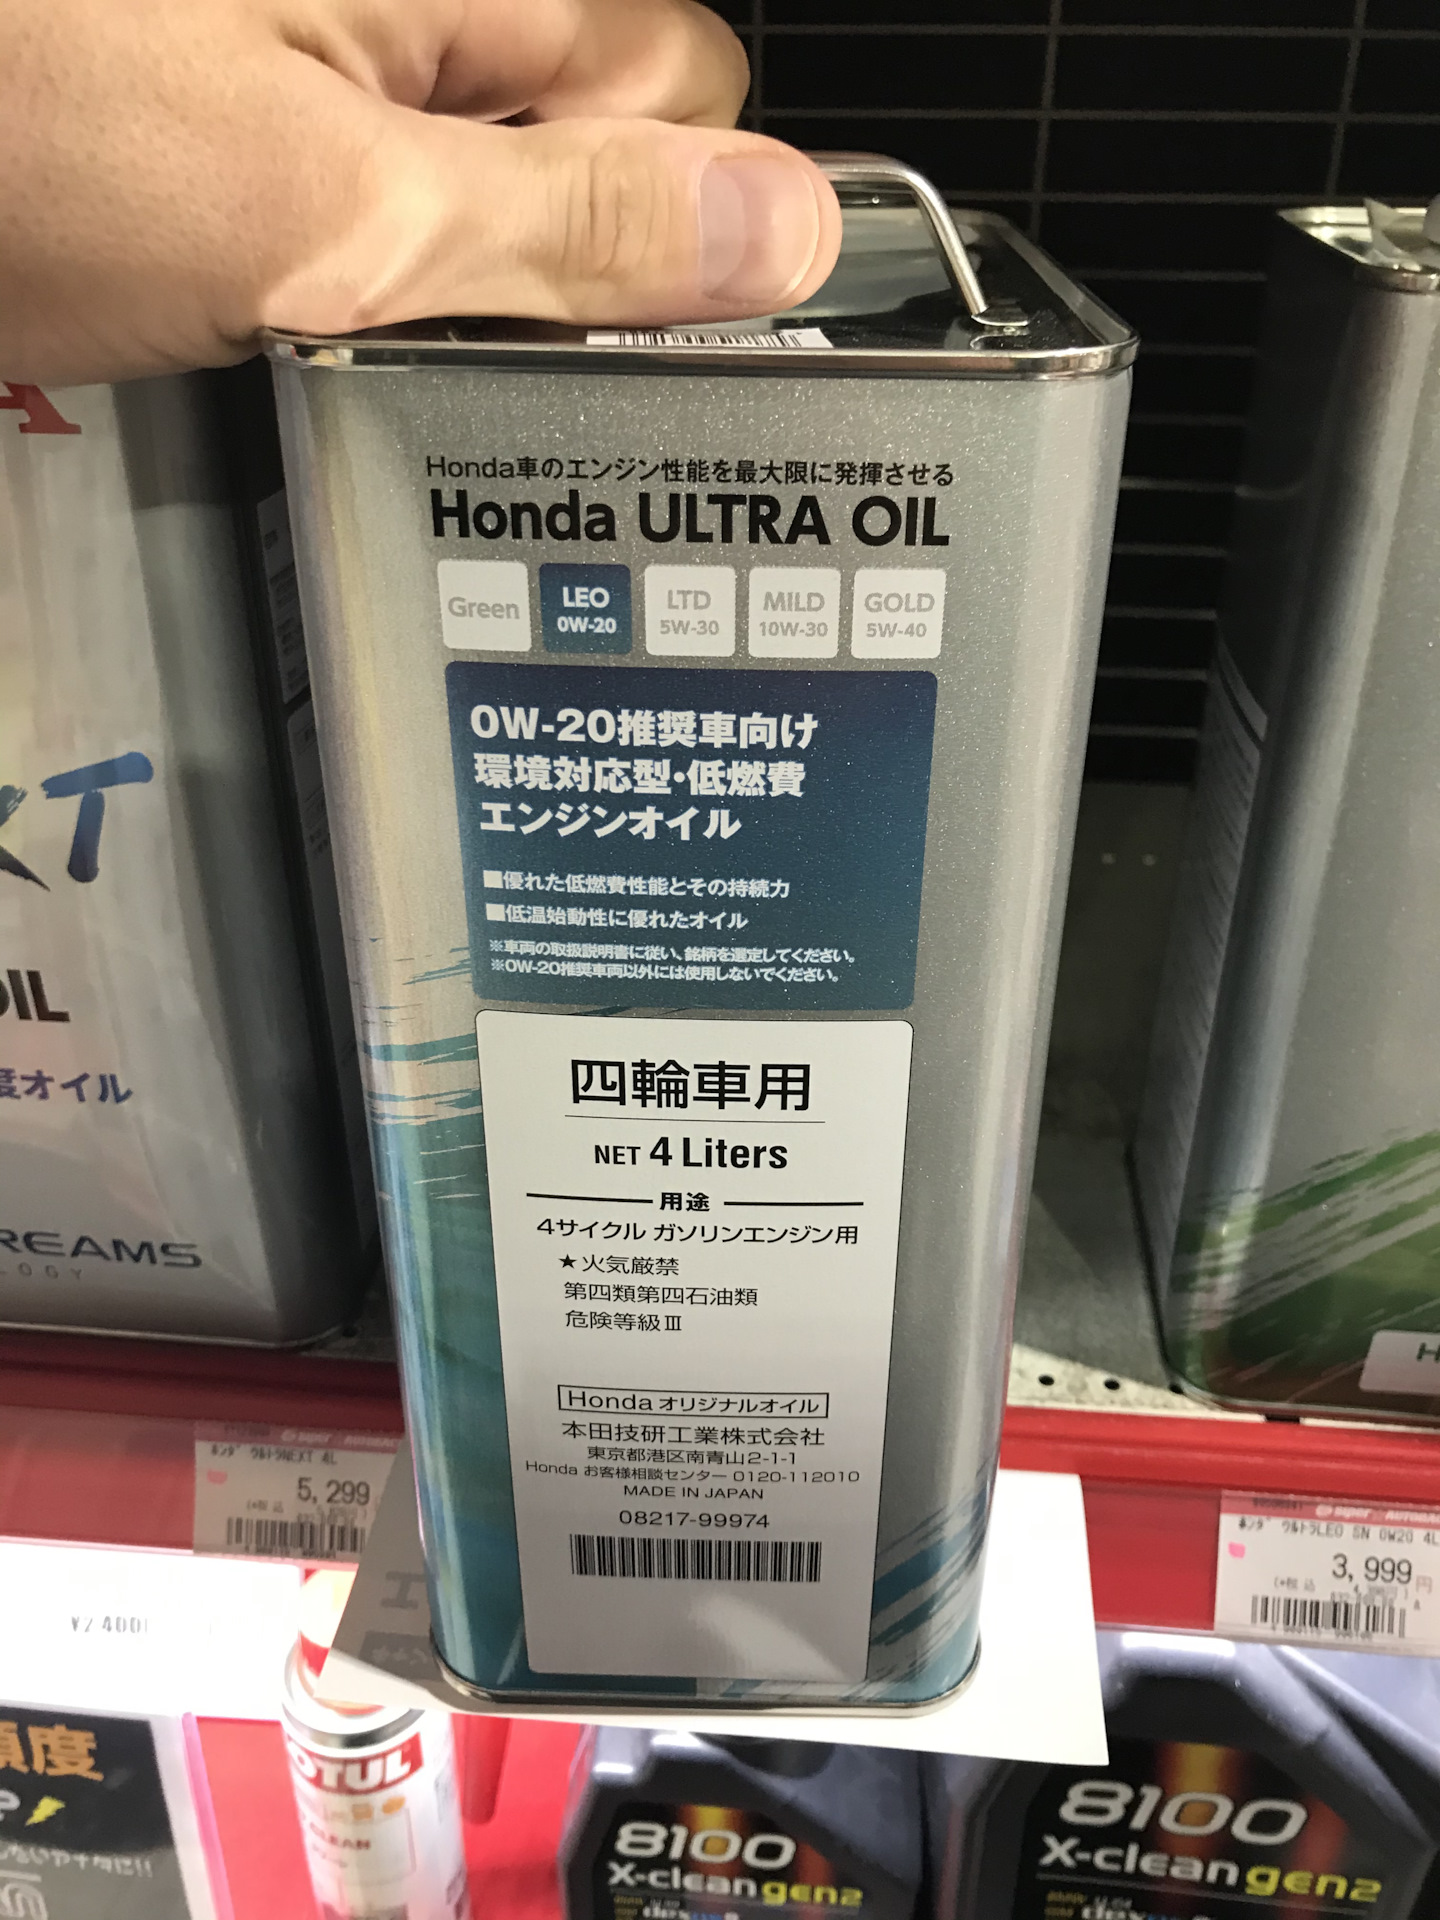 Аналог масла хонда. Хонда ультра 5w30 в железной банке. Масло Хонда Лтд 5w30. Honda Ultra Leo Oil Club. Моторное масло Honda Japan.